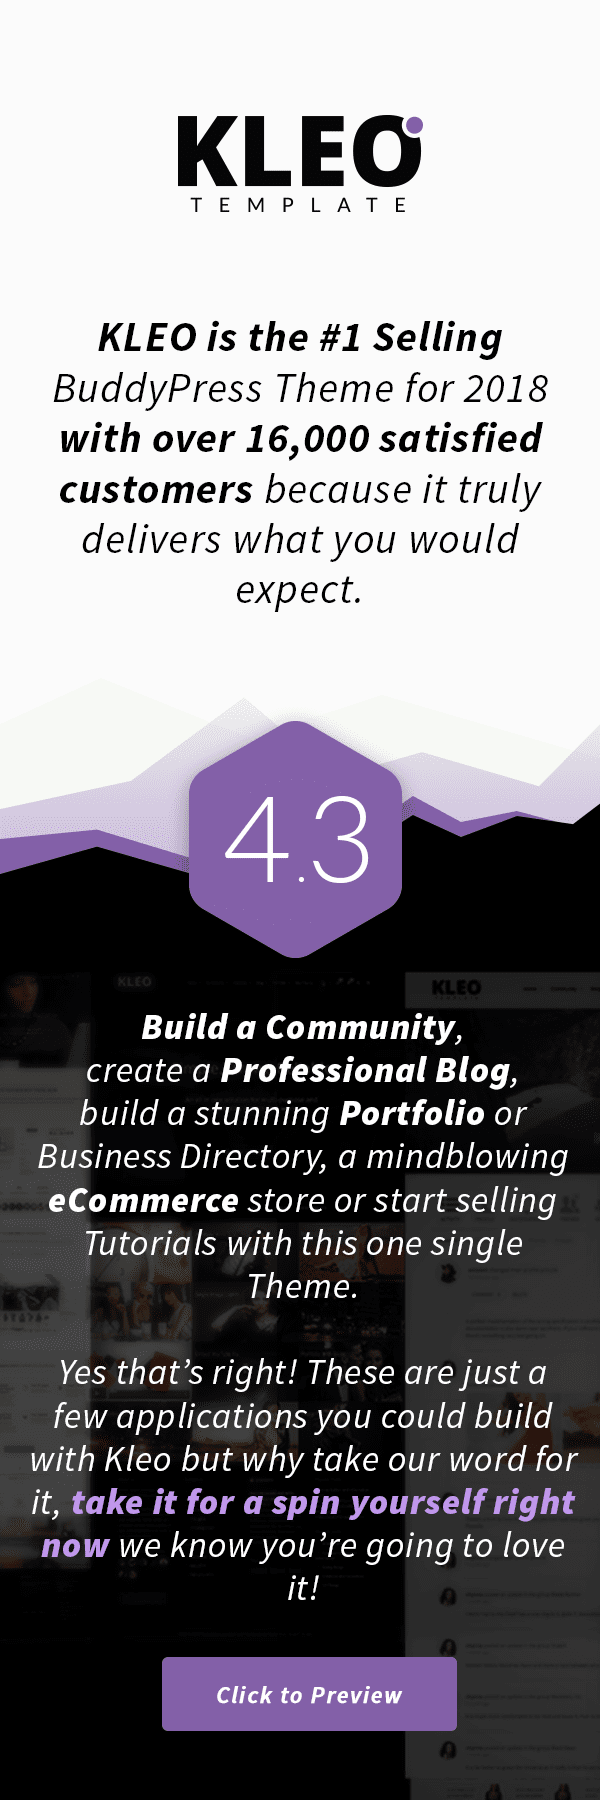 KLEO - Pro Community Focused, Multi-Purpose BuddyPress Theme - 1